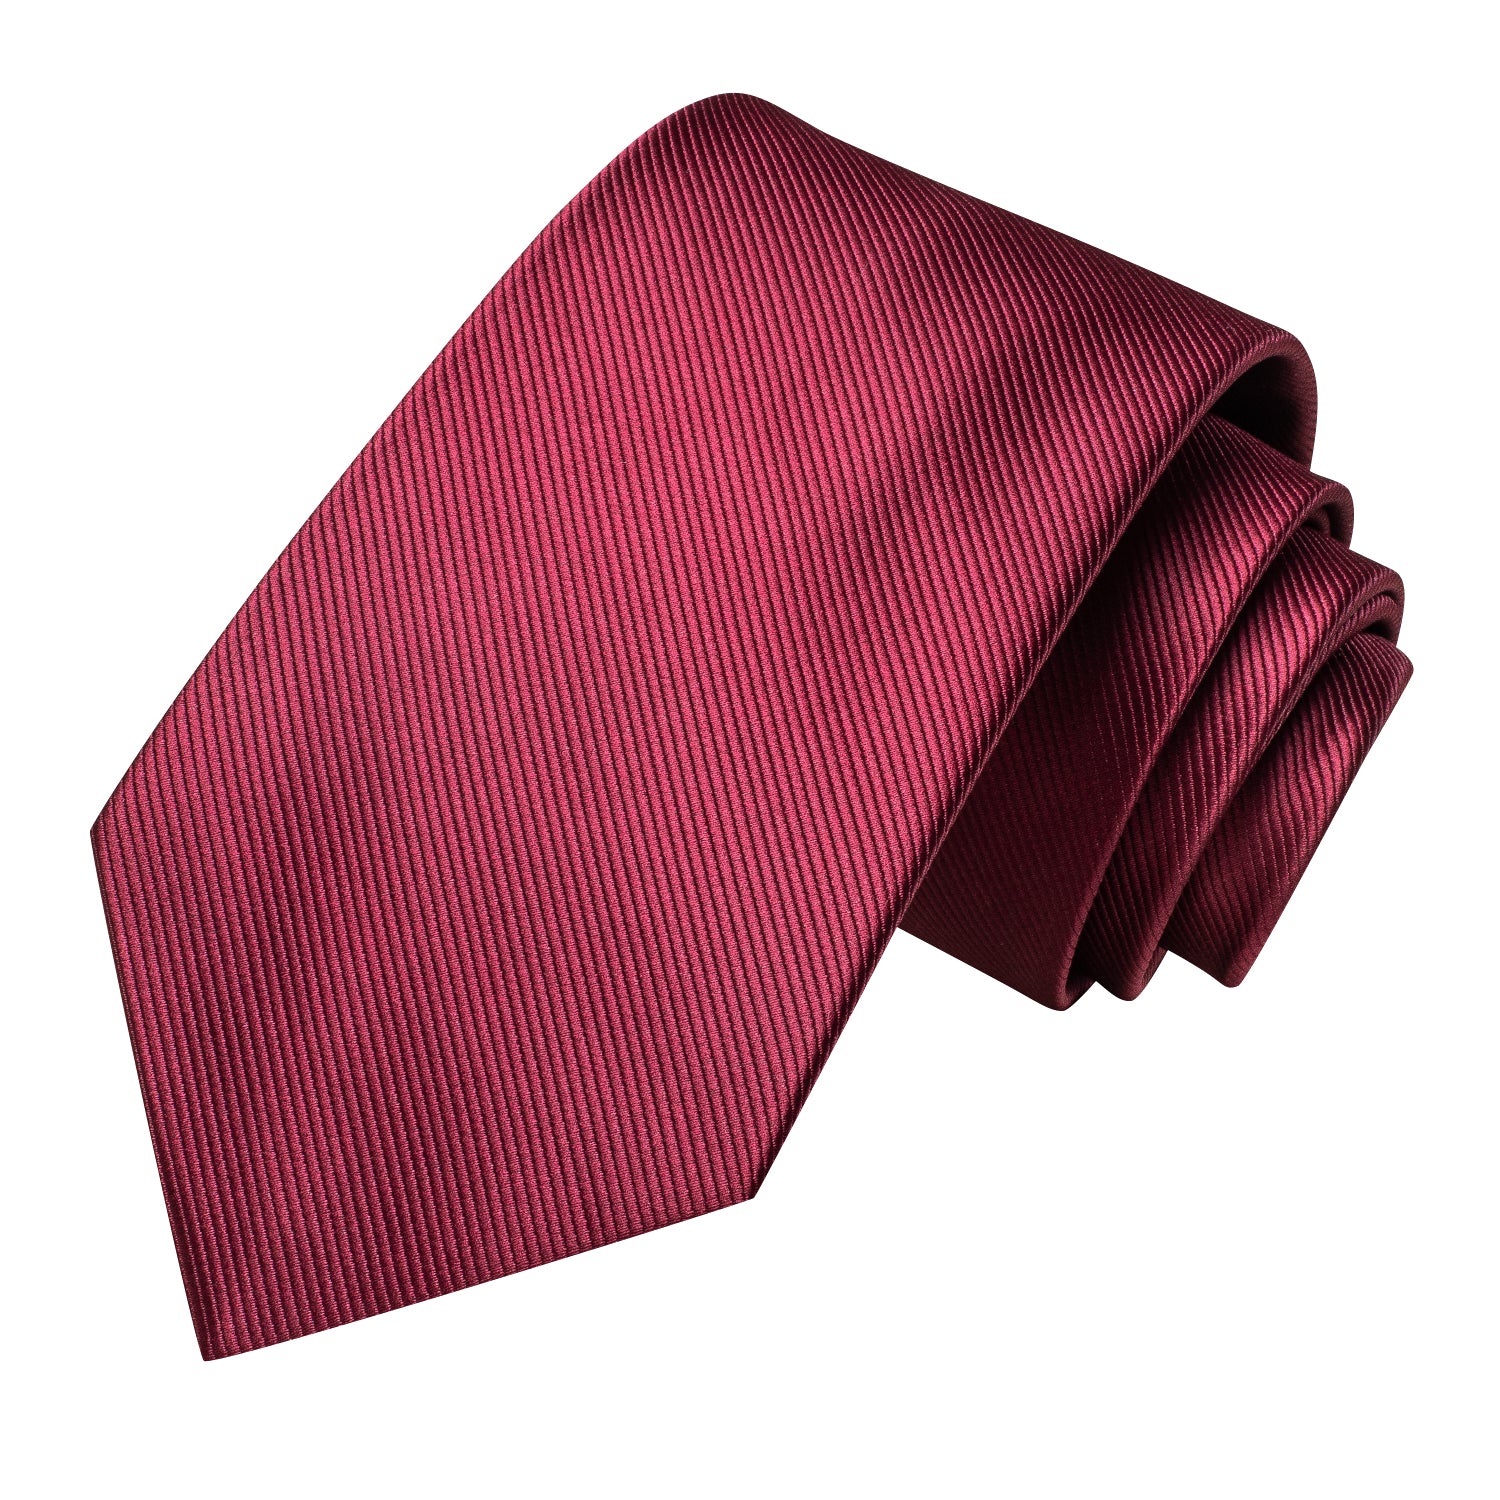 Burgundy Red Solid Tie Pocket Square Cufflinks Set